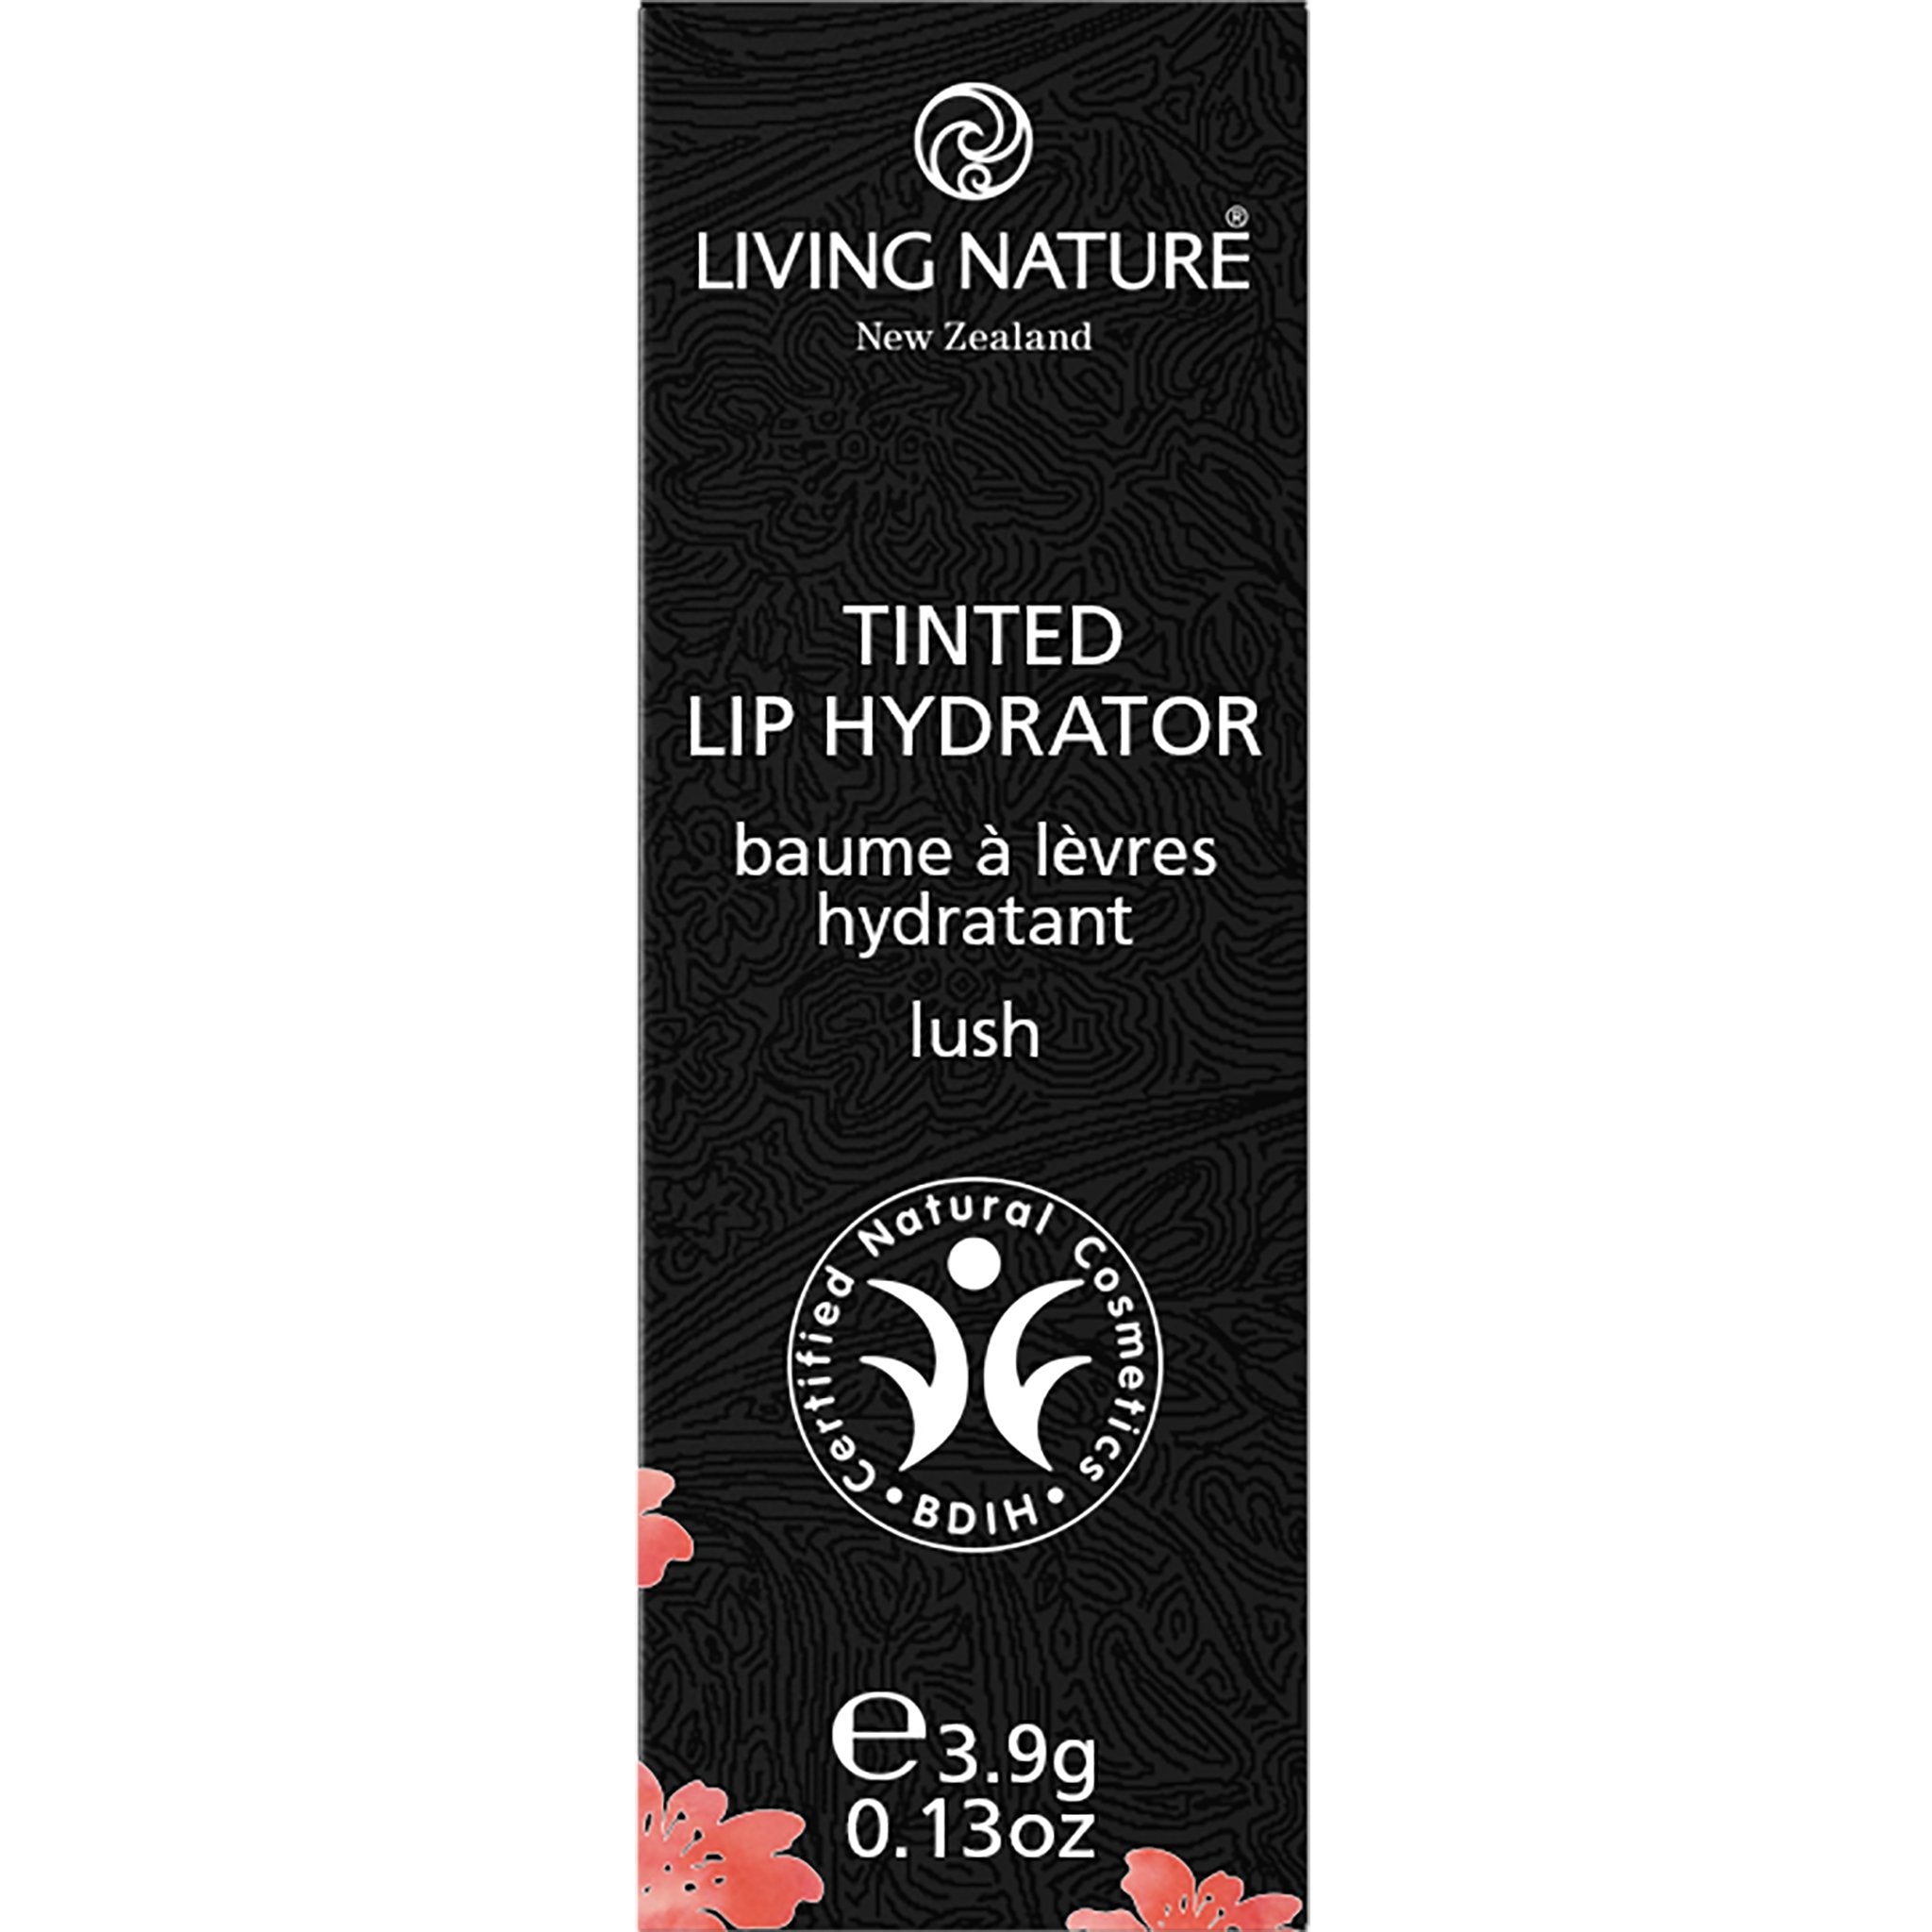 Lush Tinted Lip Hydrator - mypure.co.uk